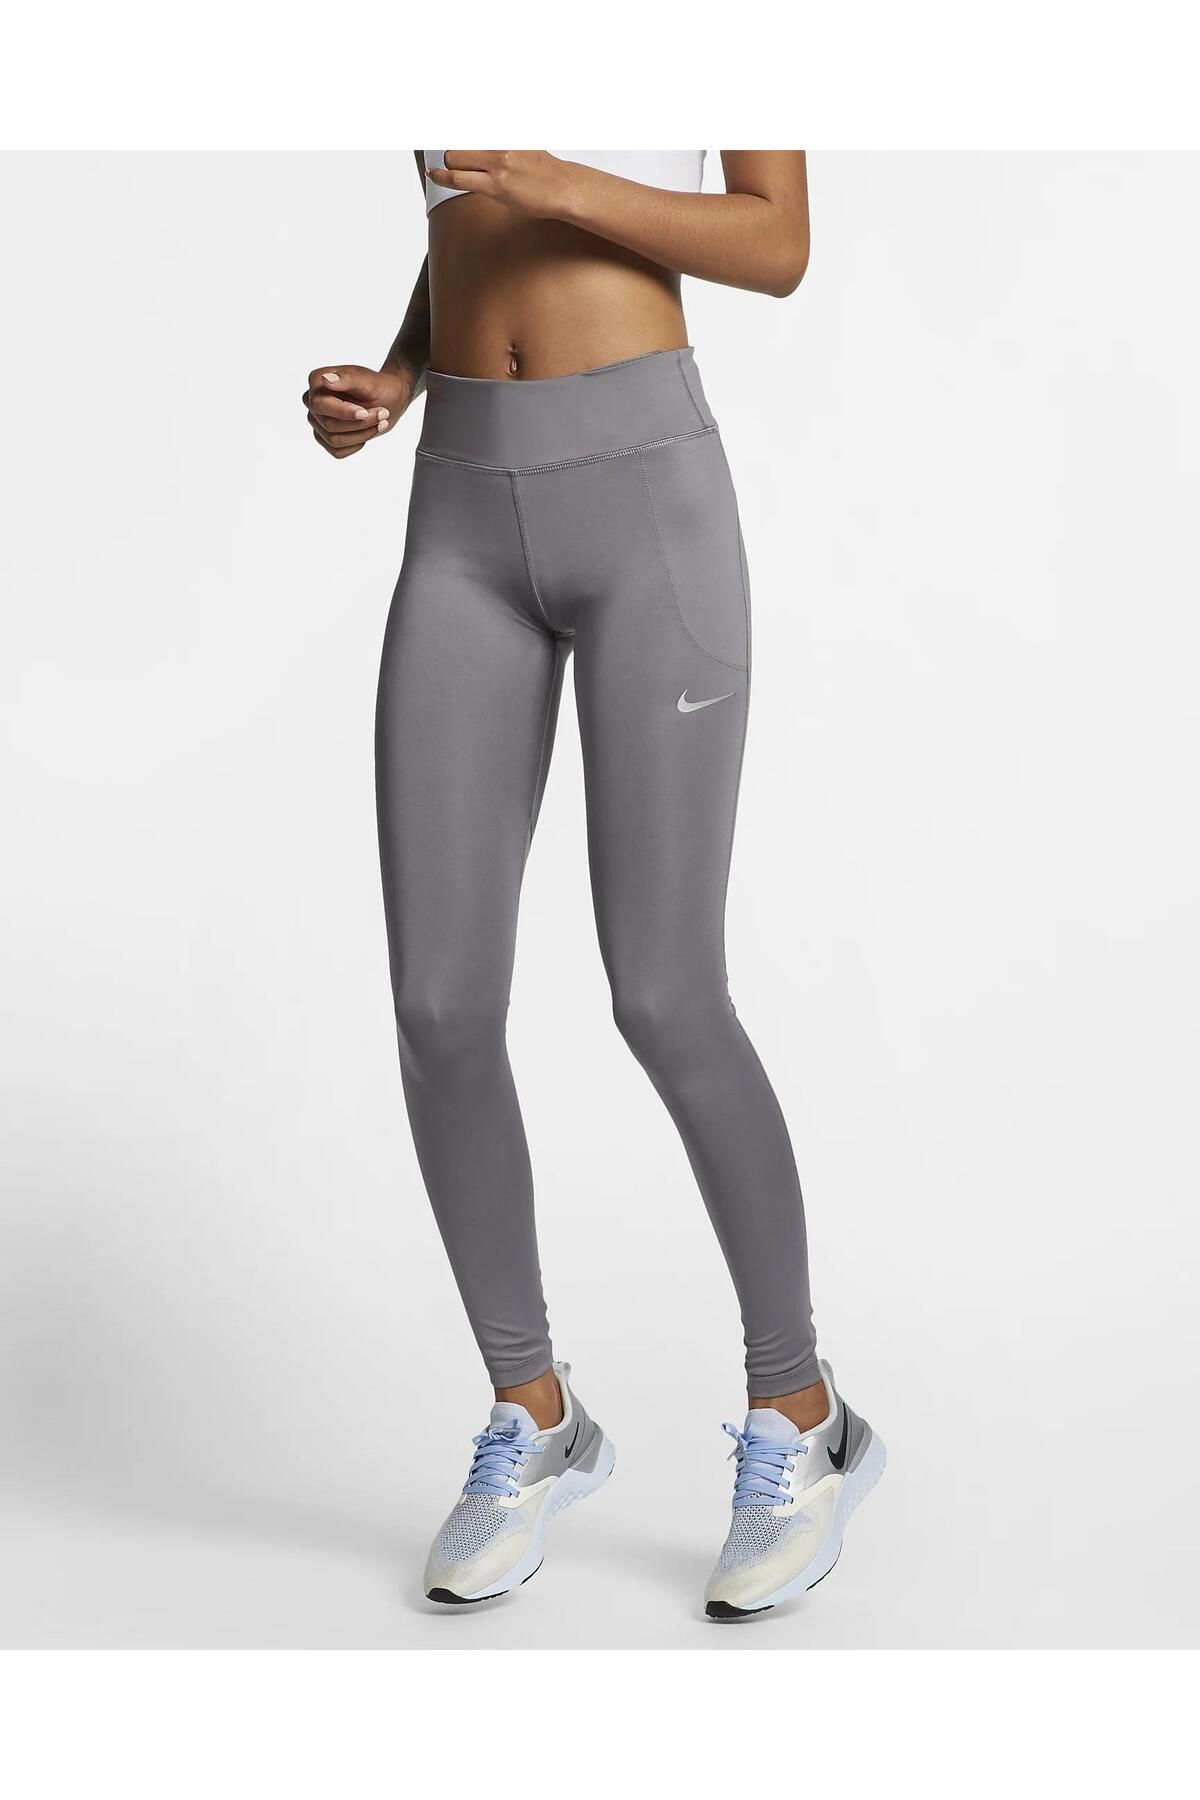 Nike Fast Kadın Tayt-at3103-056